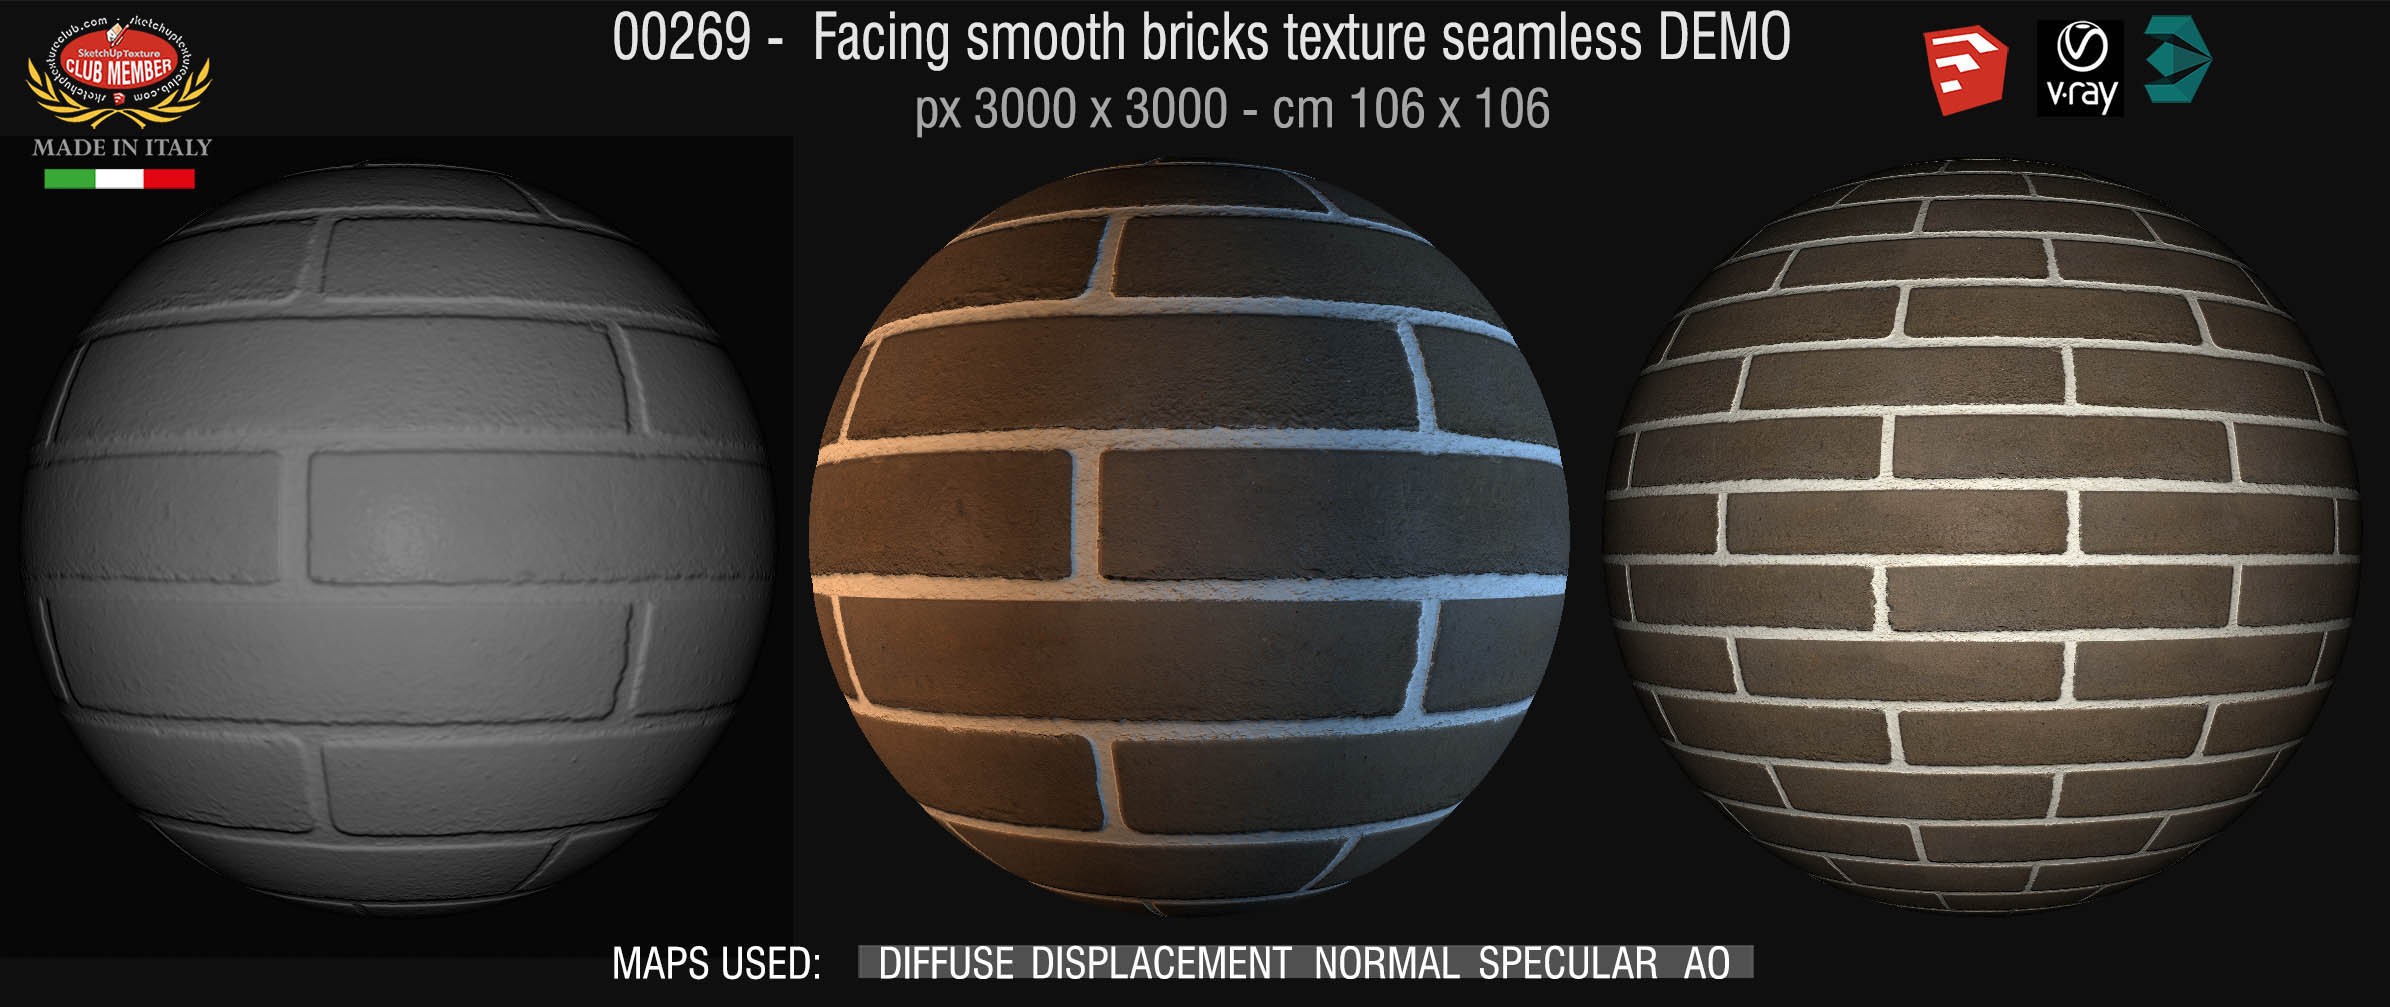 00269 Facing smooth bricks texture seamless + maps DEMO